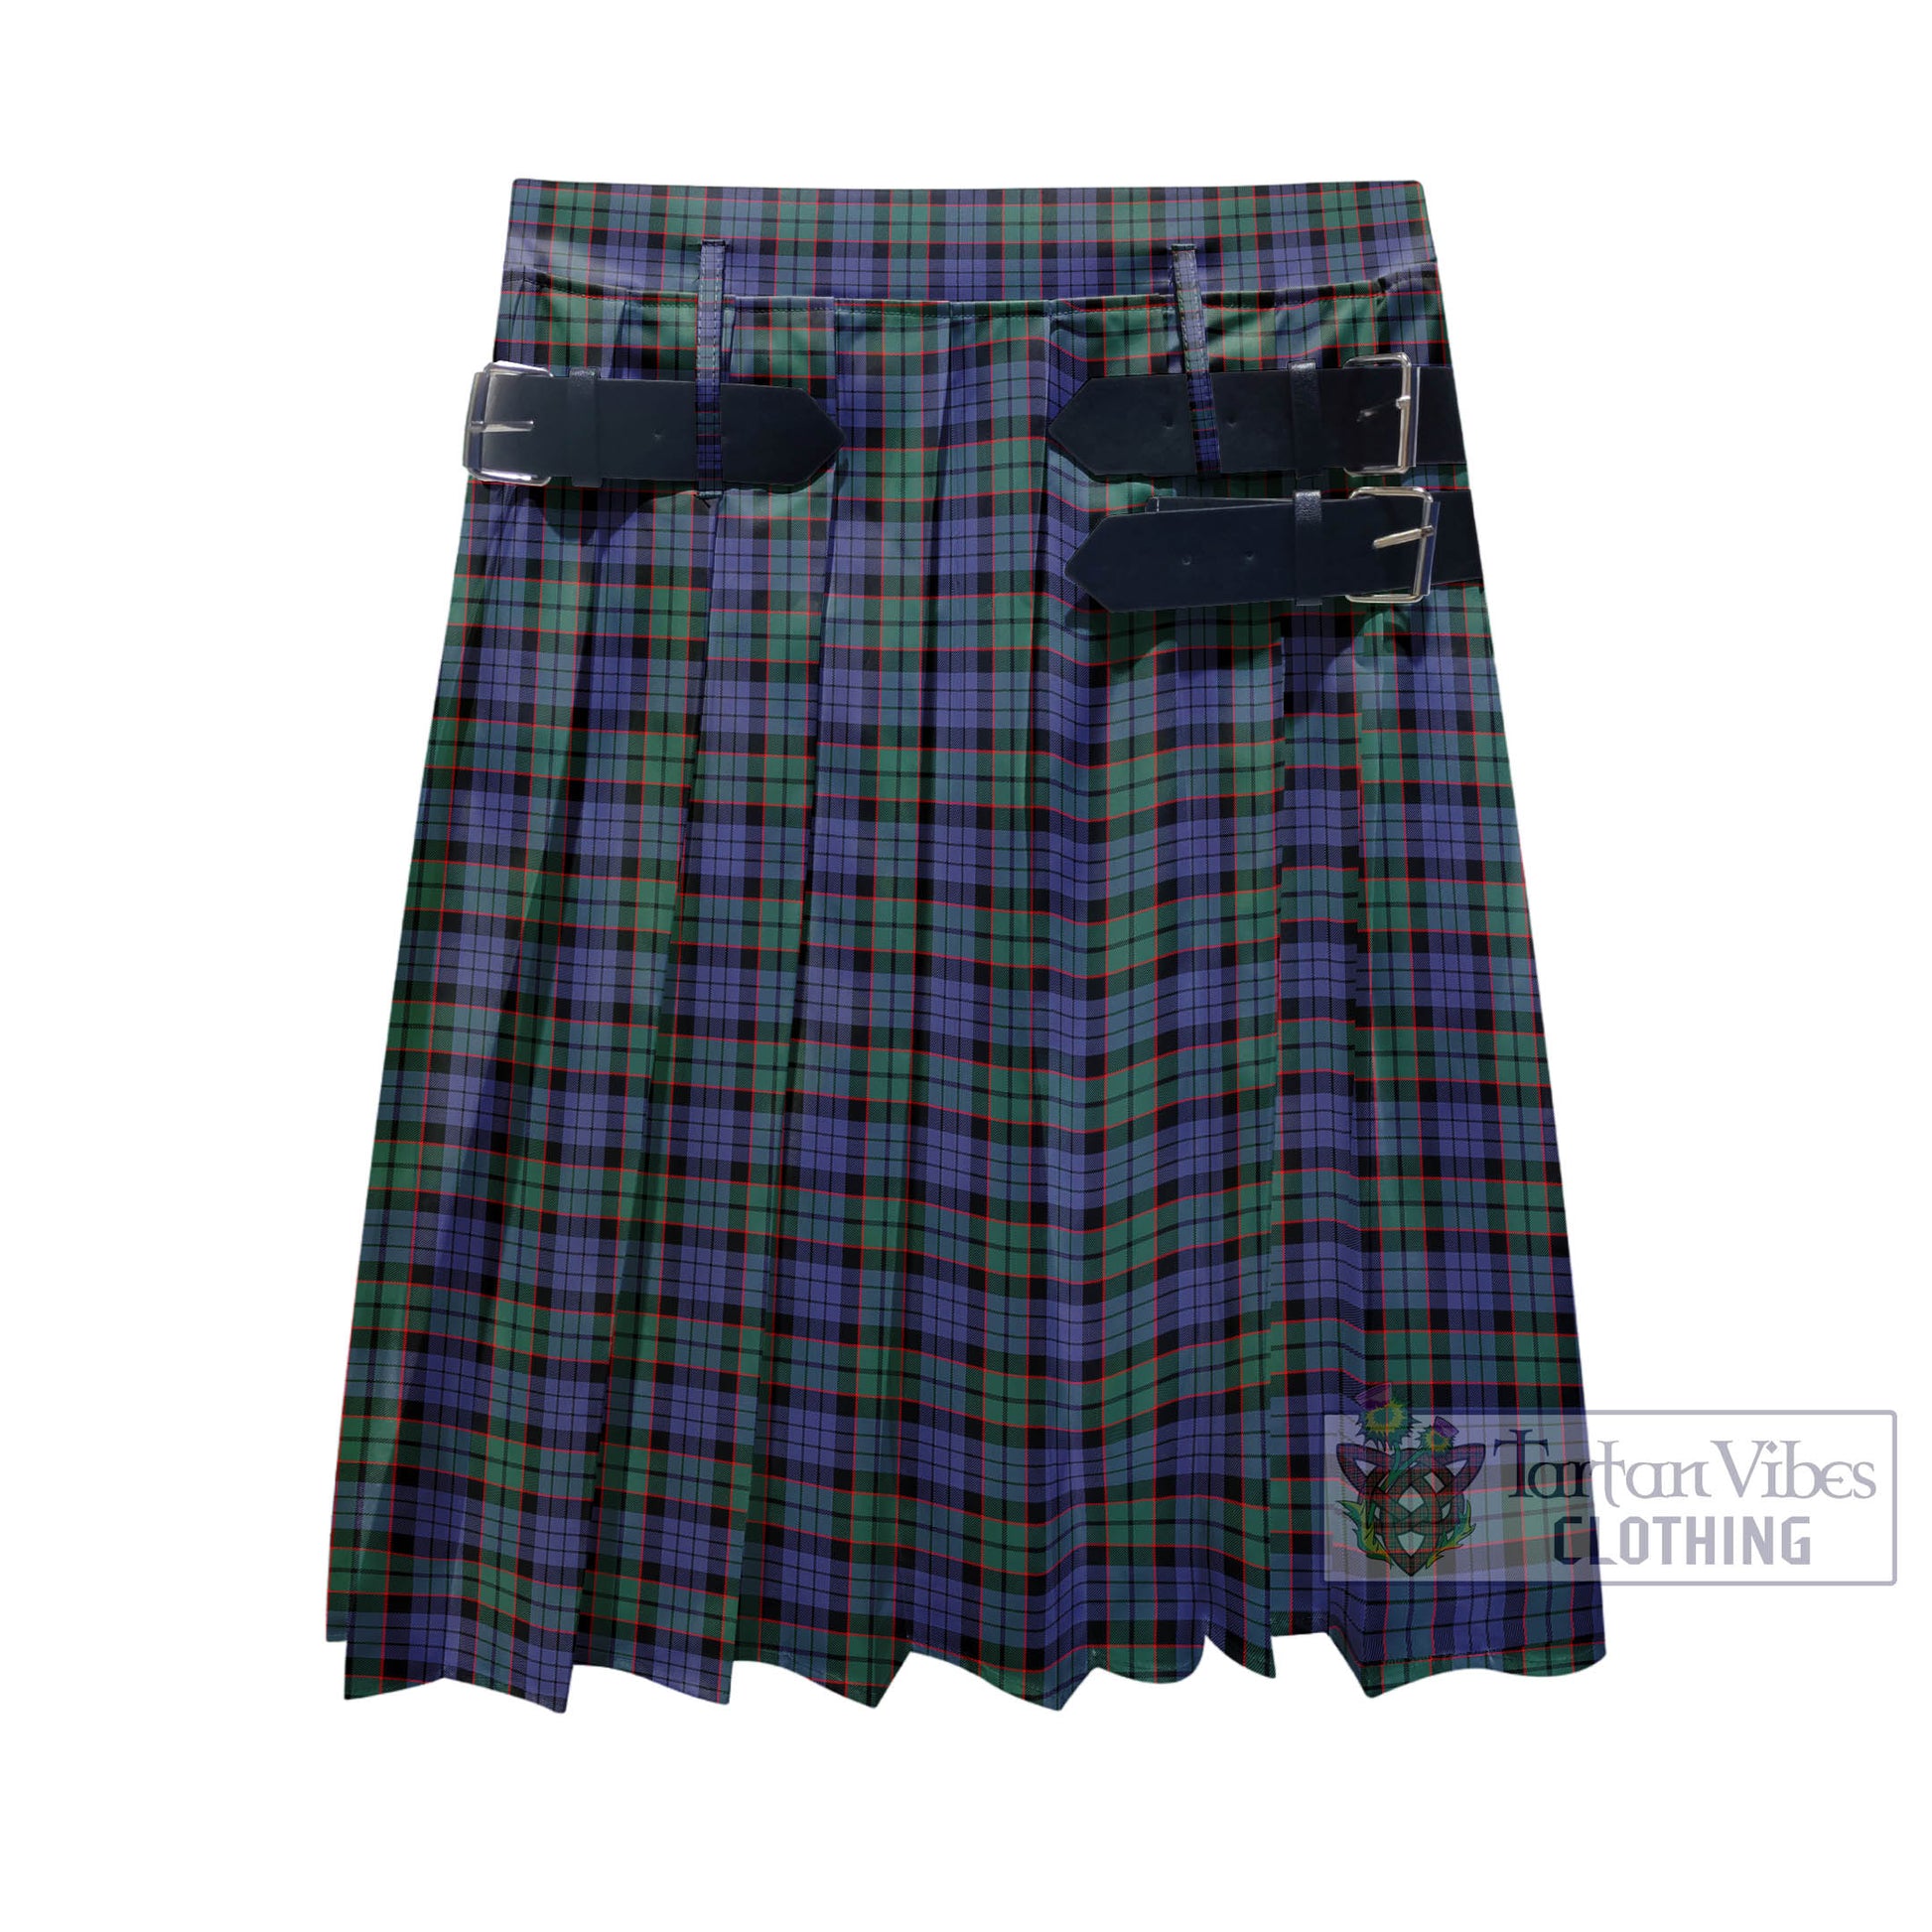 Tartan Vibes Clothing Fletcher Modern Tartan Men's Pleated Skirt - Fashion Casual Retro Scottish Style